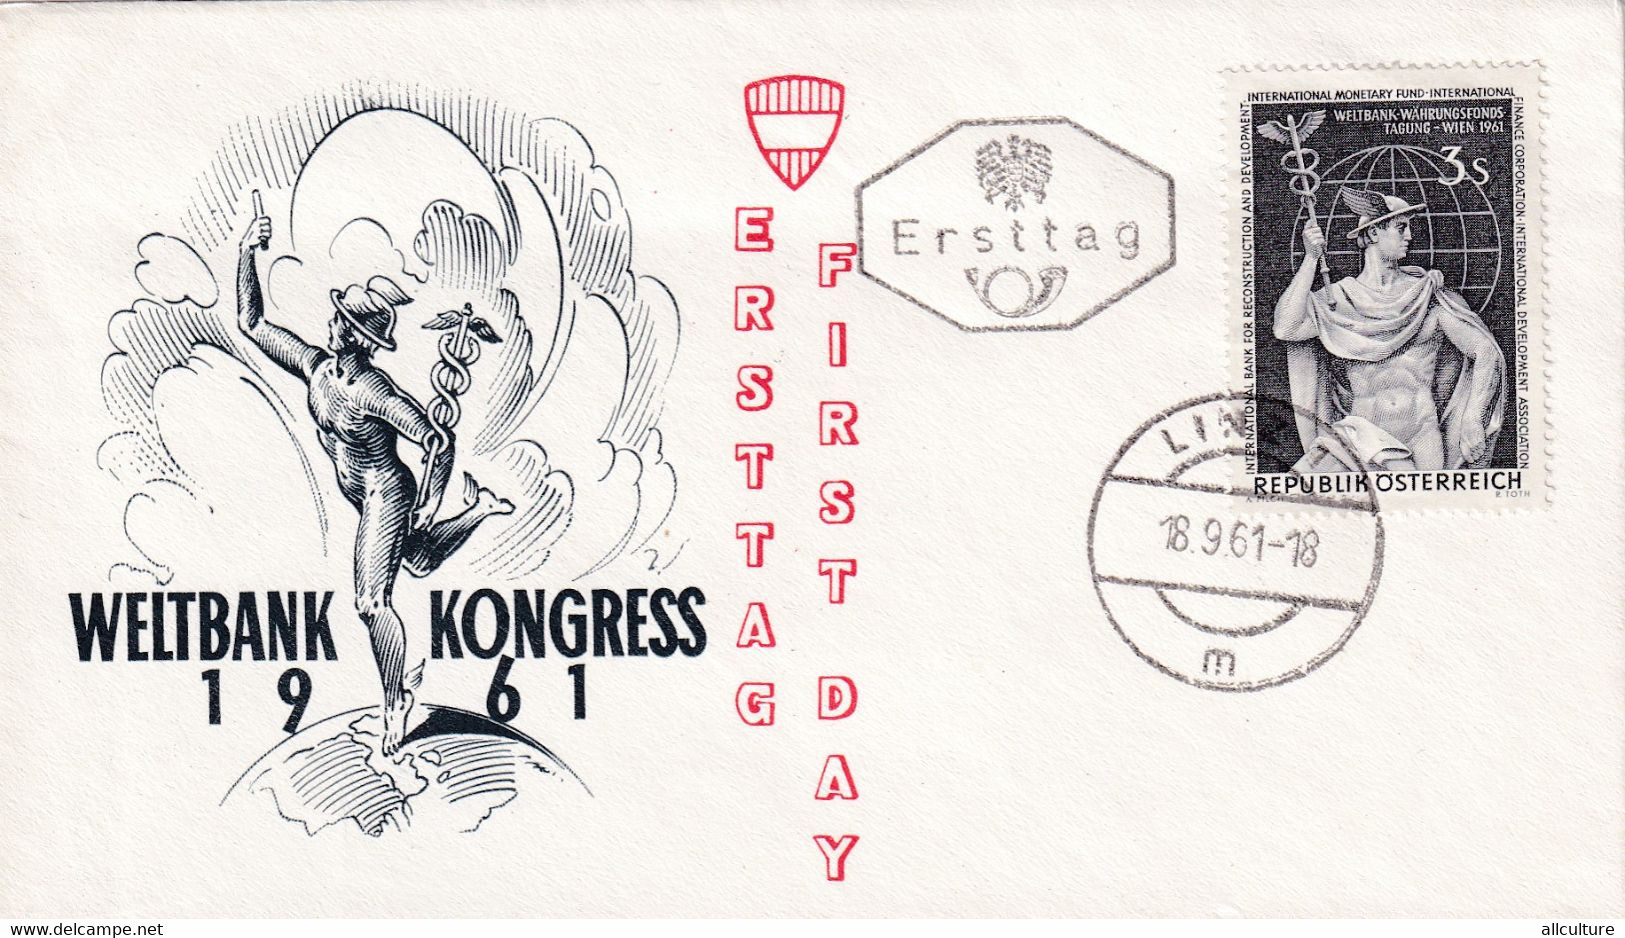 A8383- WELTBANK KONGRESS 1961, ERSTTAG, LINZ 1961 REPUBLIK OESTERREICH AUSTRIA USED STAMP ON COVER - Storia Postale